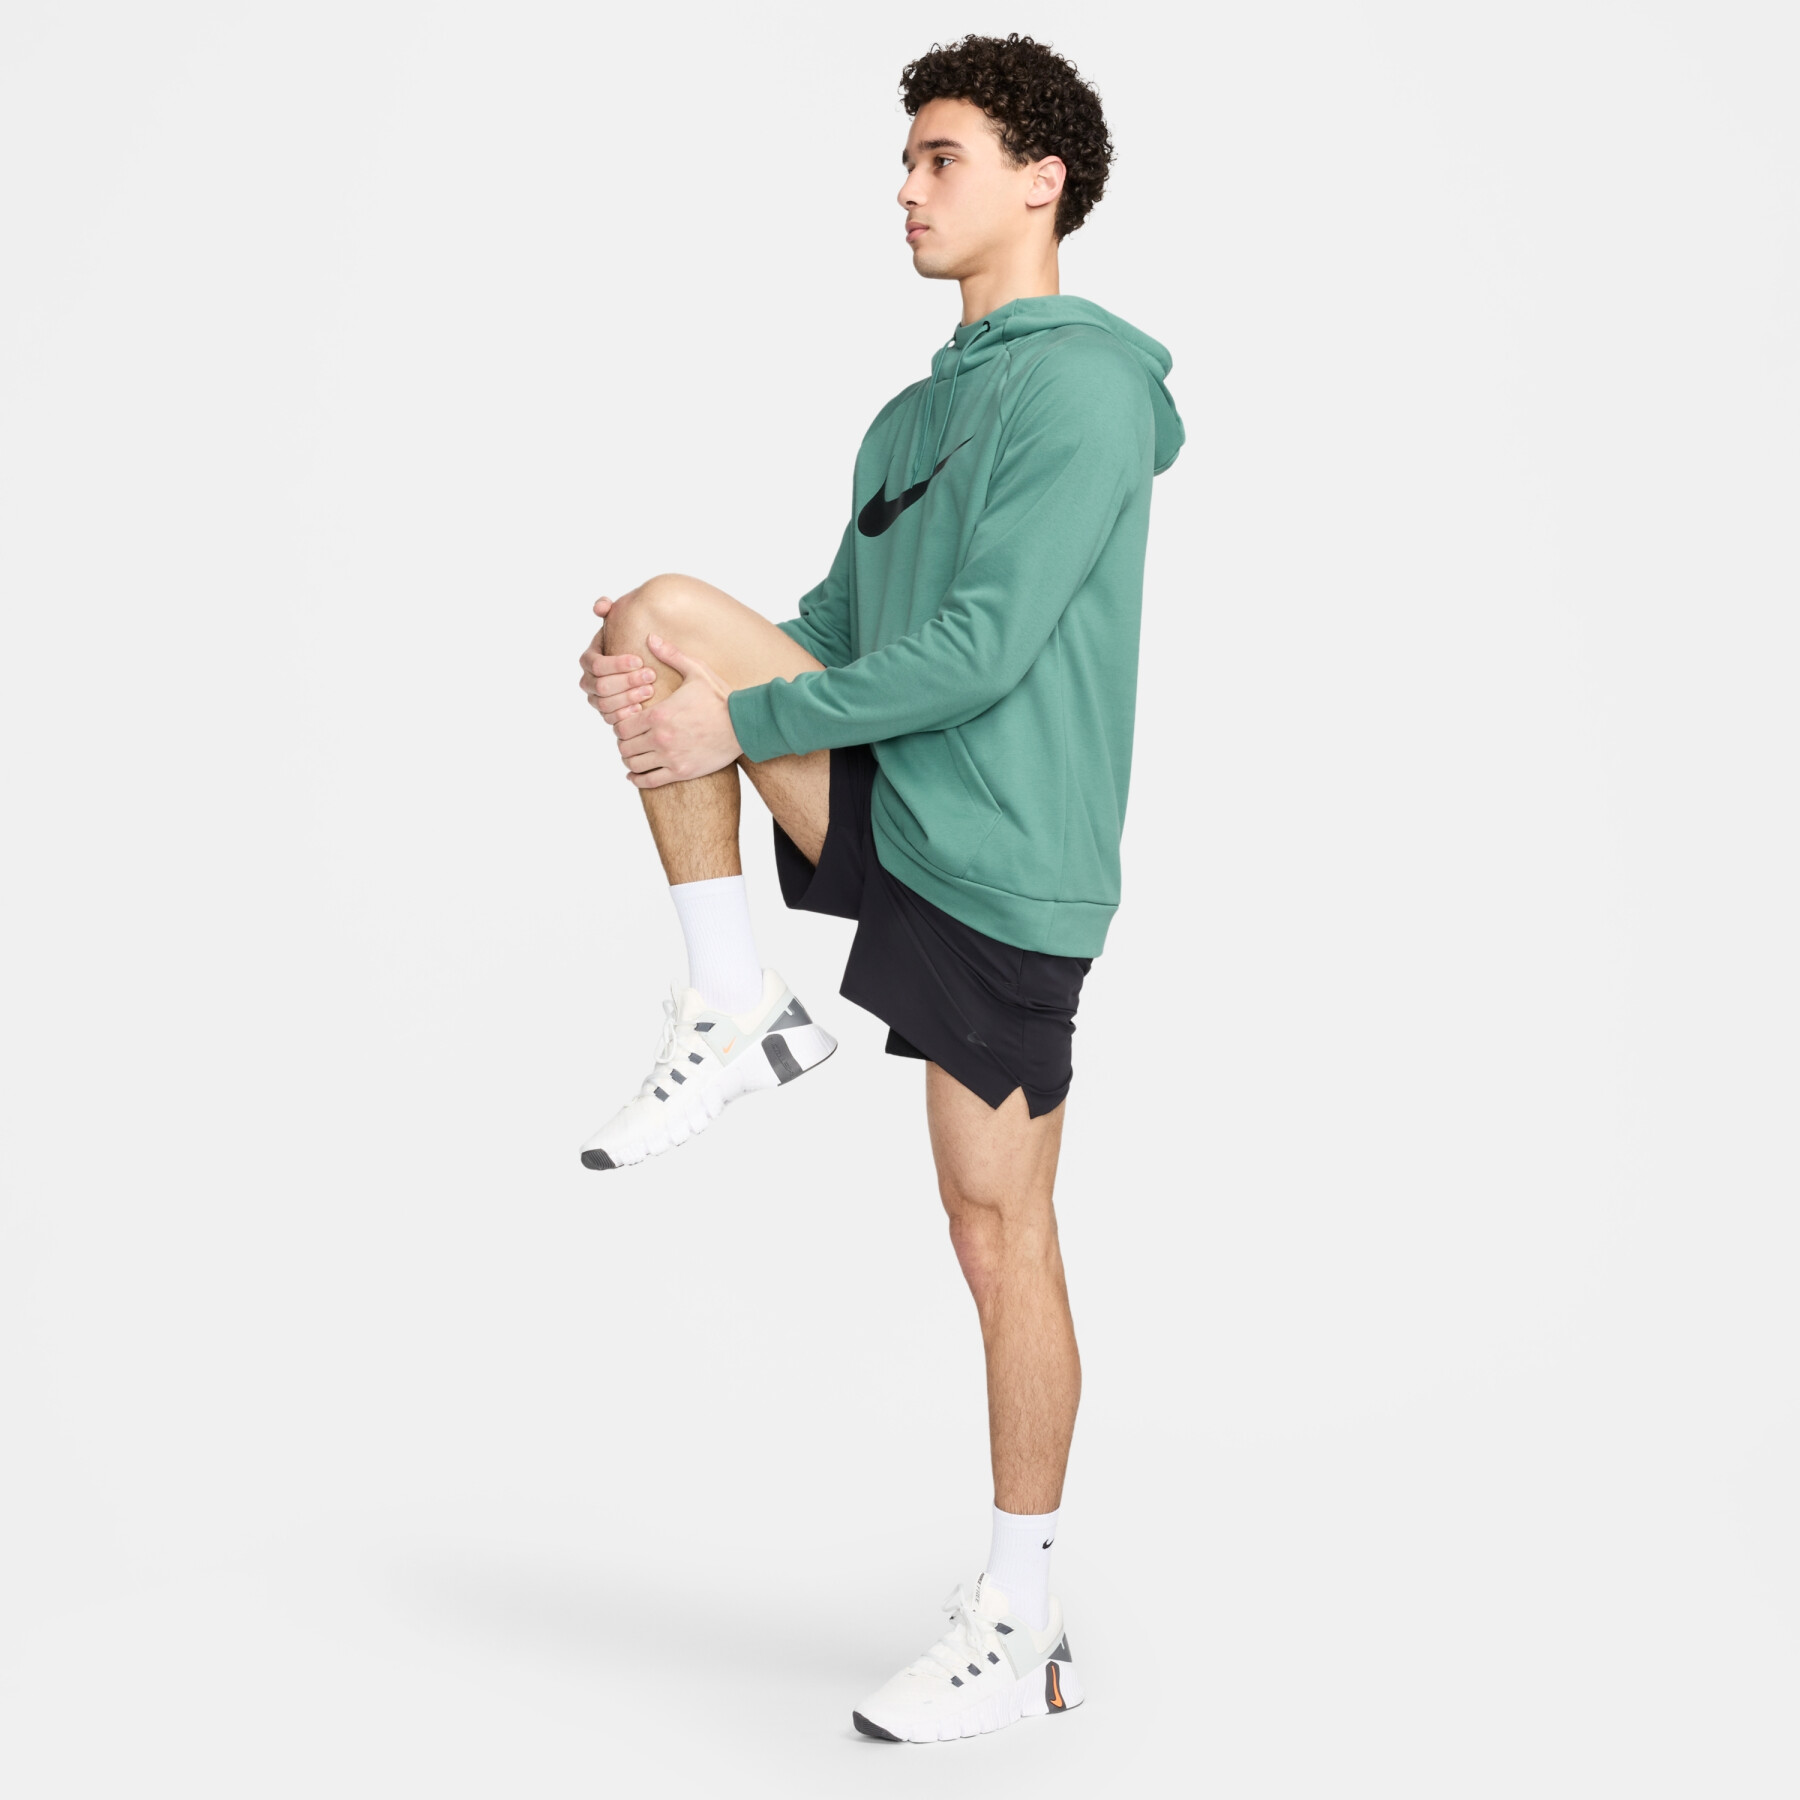 Hooded sweatshirt Nike Dri-FIT